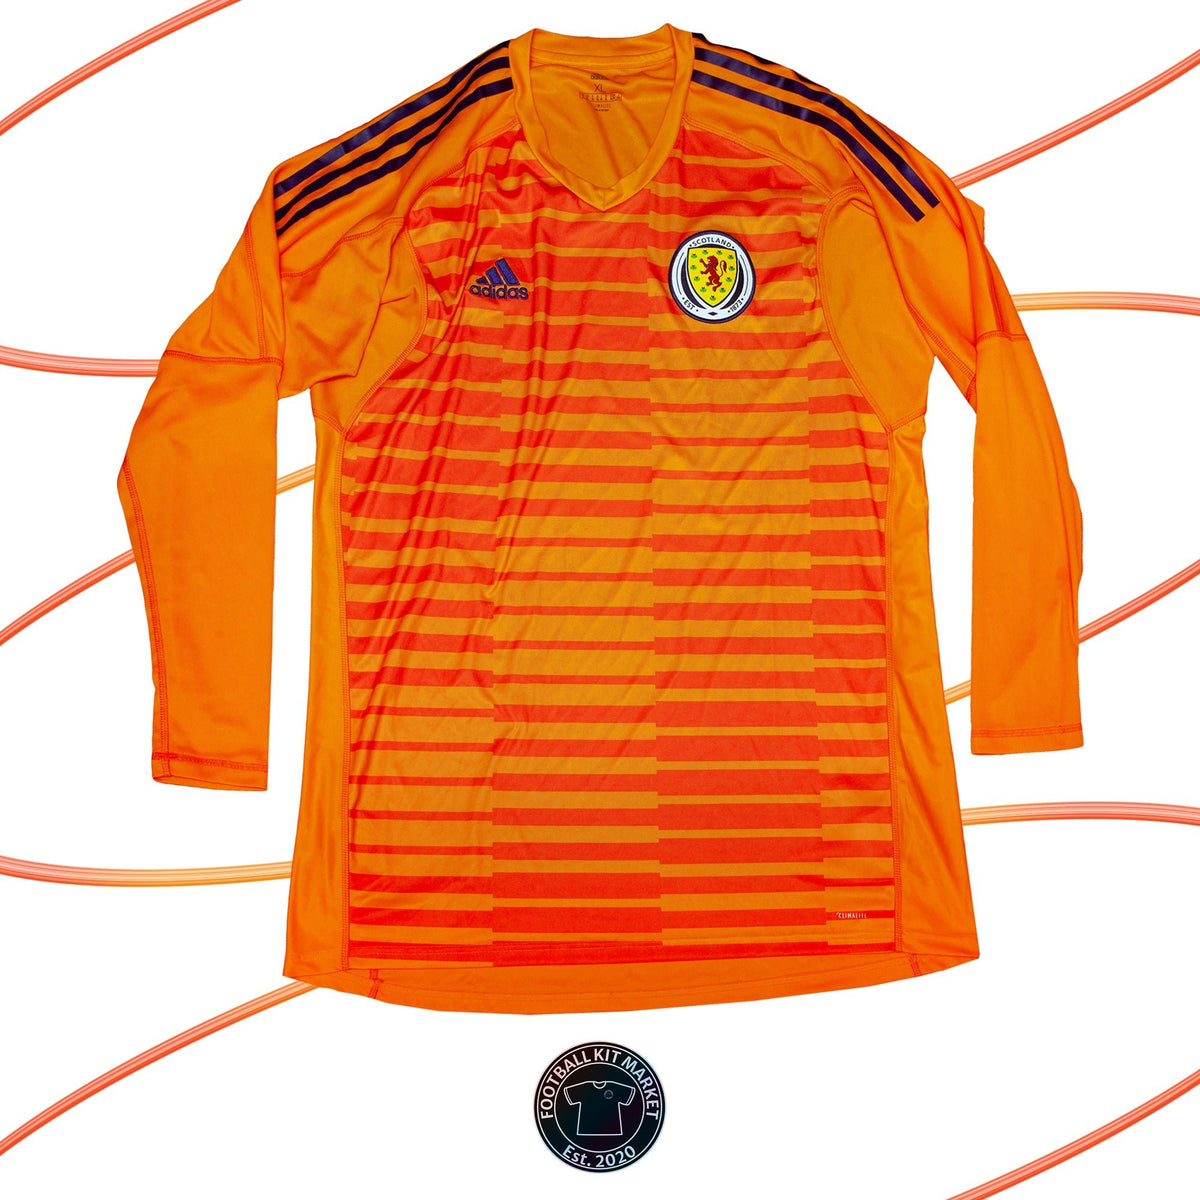 Genuine SCOTLAND Goalkeeper Shirt (2018-2019) - ADIDAS (XL) - Product Image from Football Kit Market